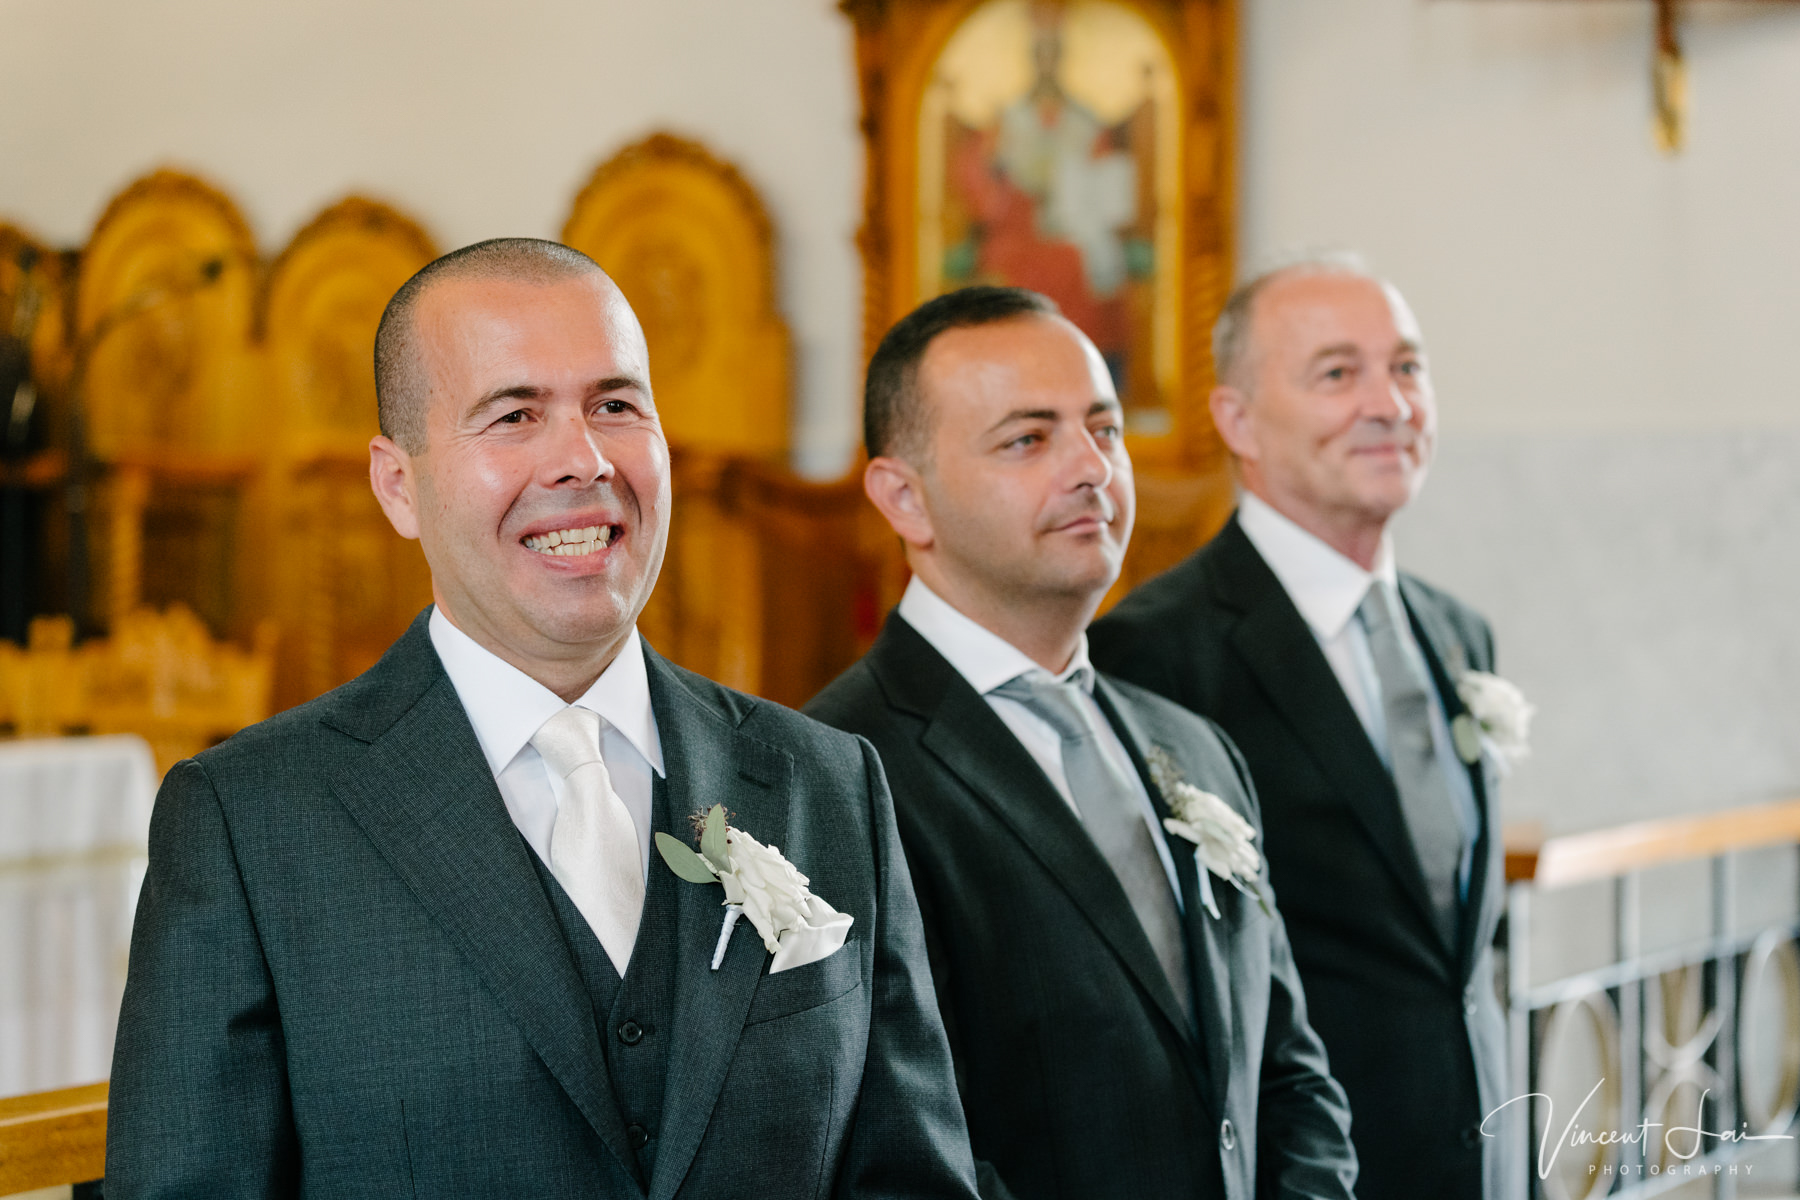 Wedding at St Nicholas Greek Orthodox Church Wedding and Sergeants Mess Reception